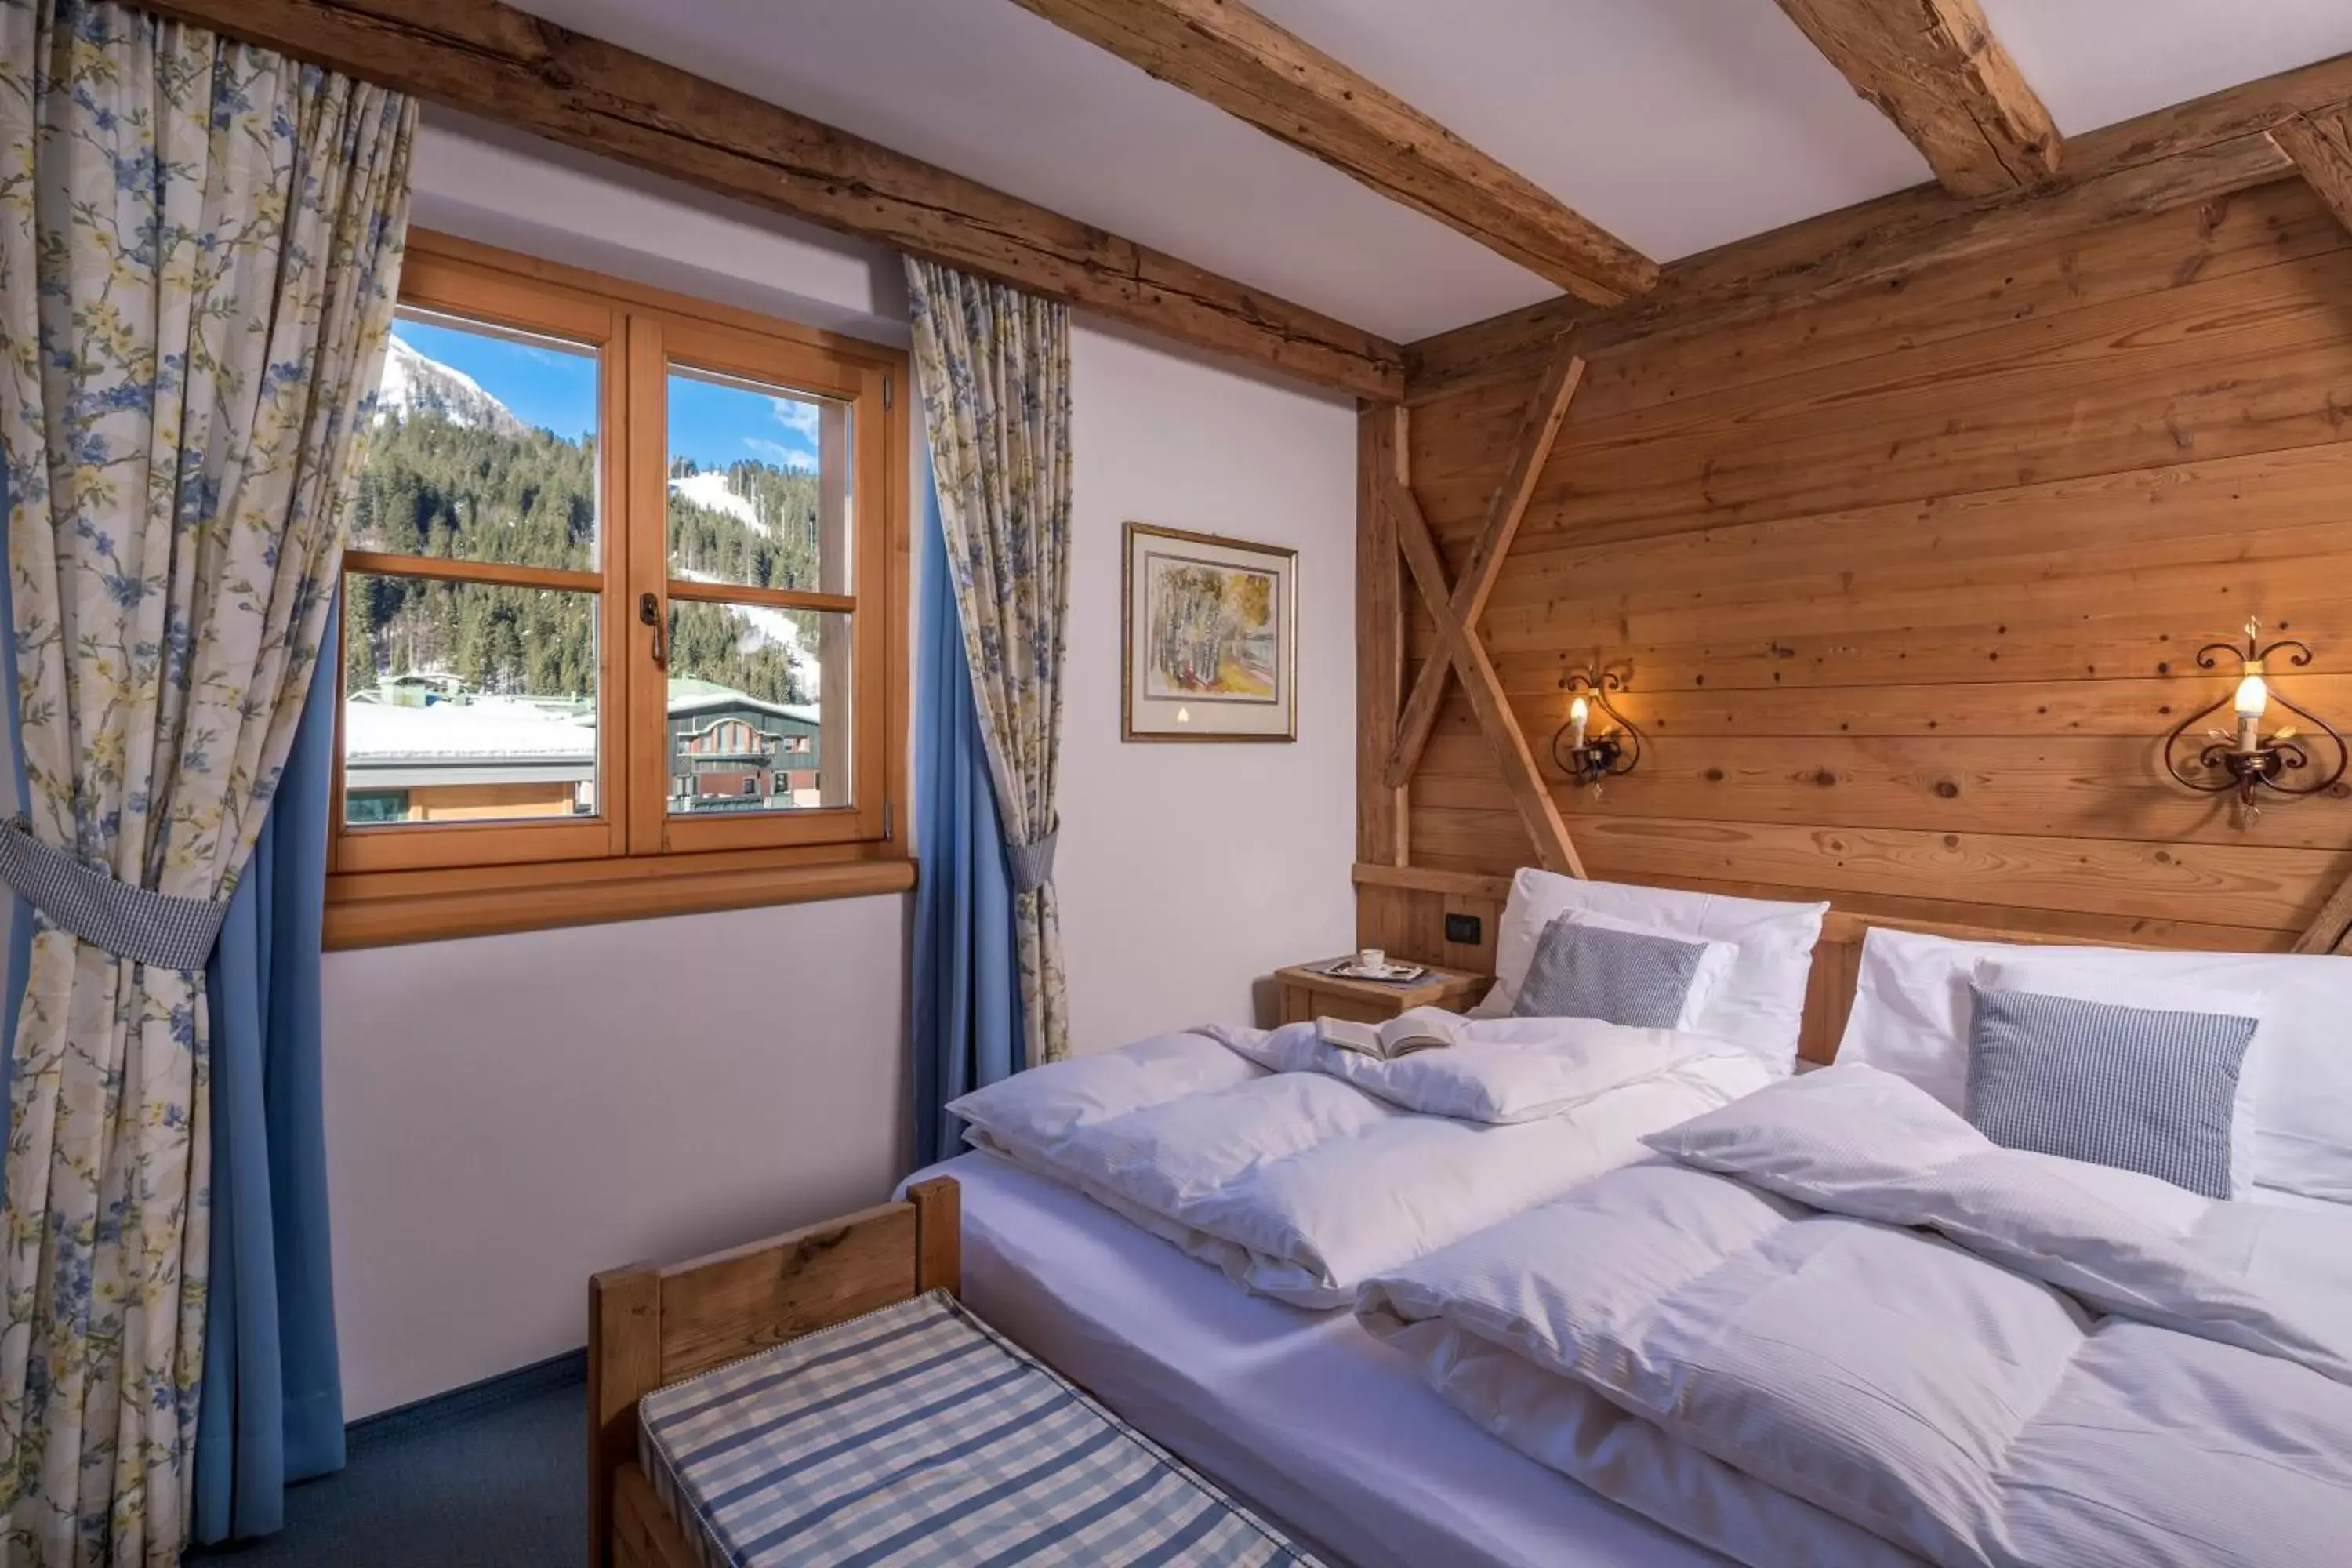 Bed, Room Photo in Hotel Chalet Del Sogno